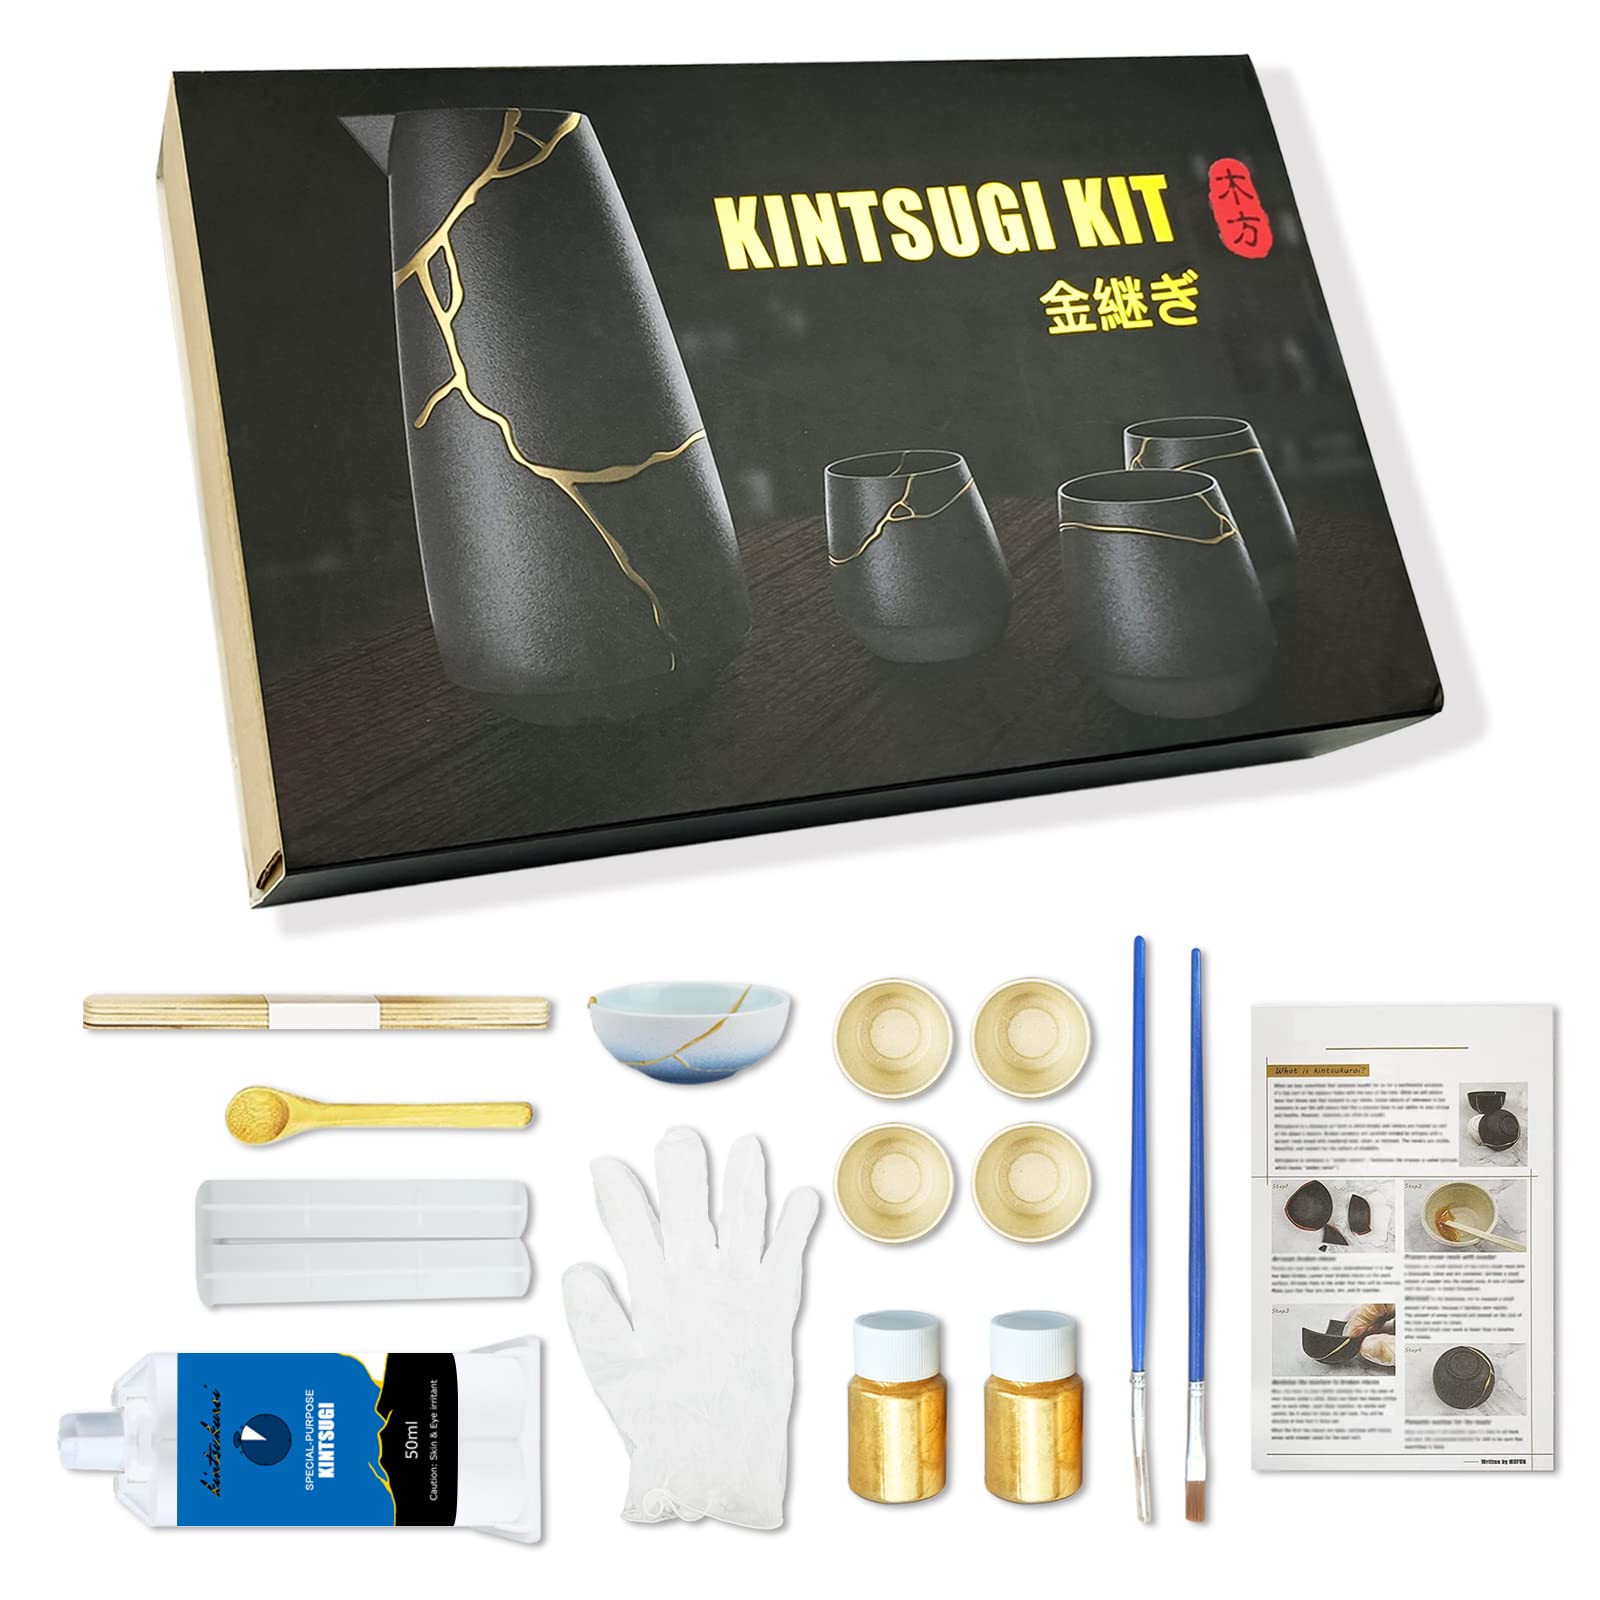 TSUGUKIT English manual Kintsugi repair kit beginners Gold powder Japan